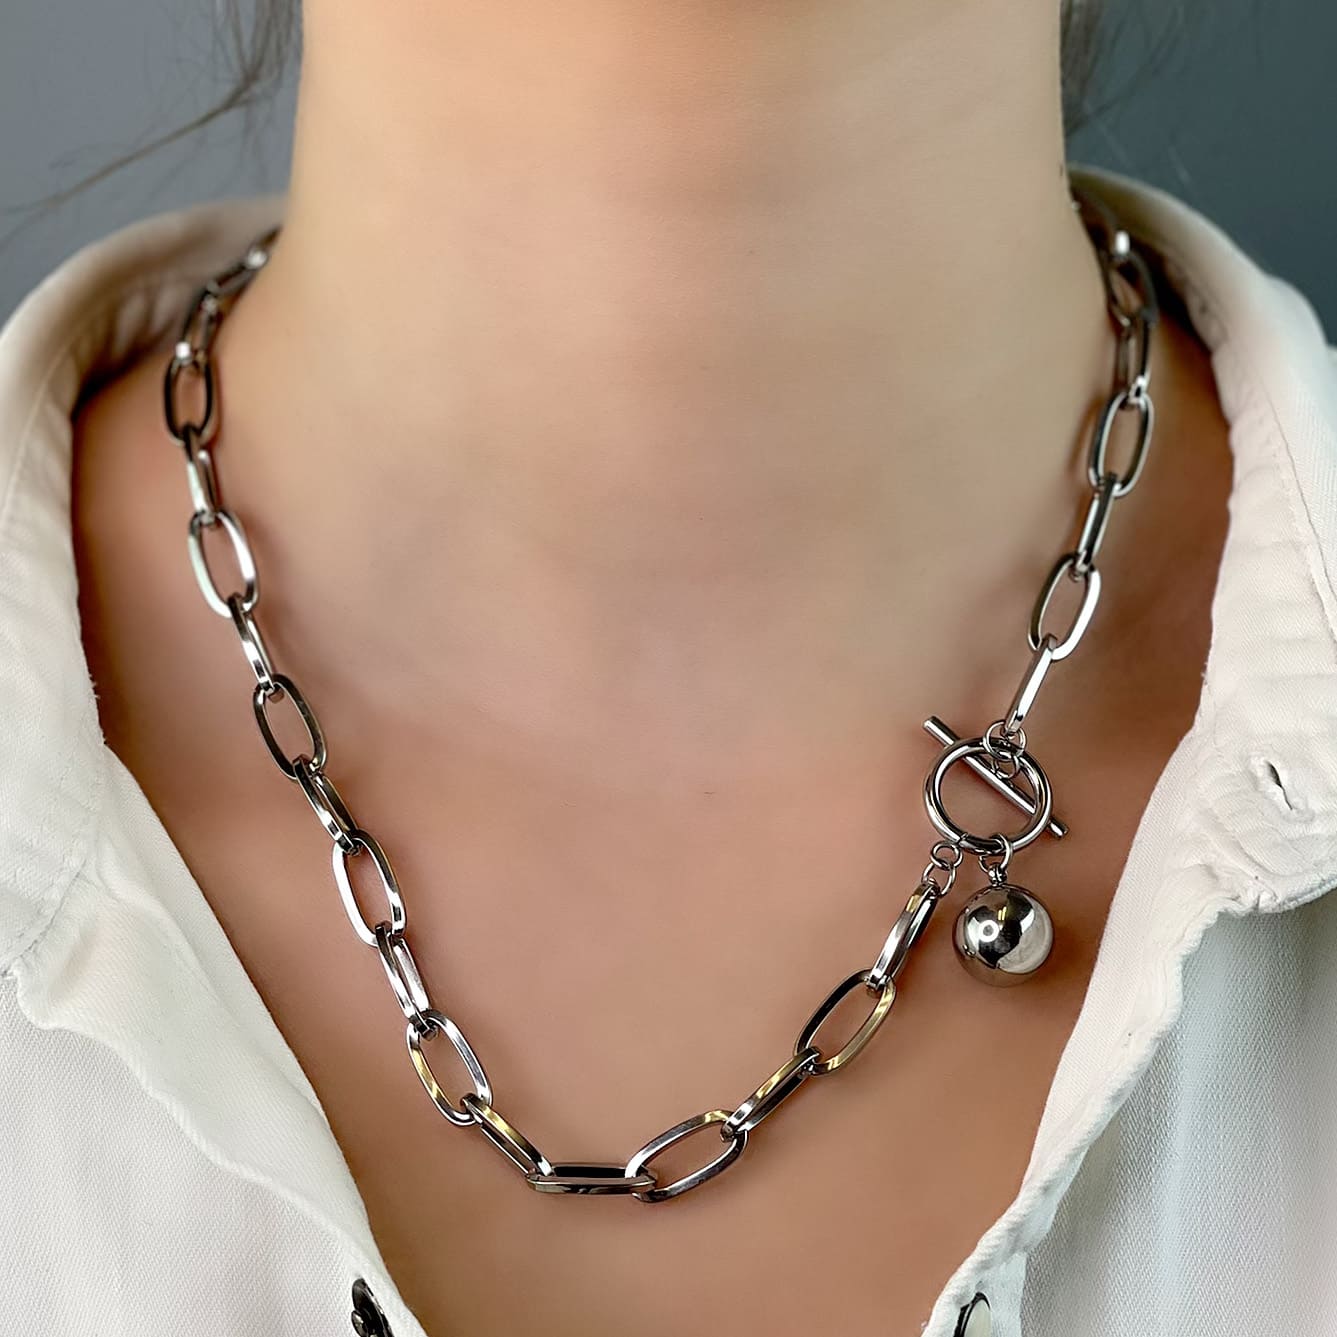 Hellen.V - Silver Chain Necklace | Ball Pendant | Chain Necklaces